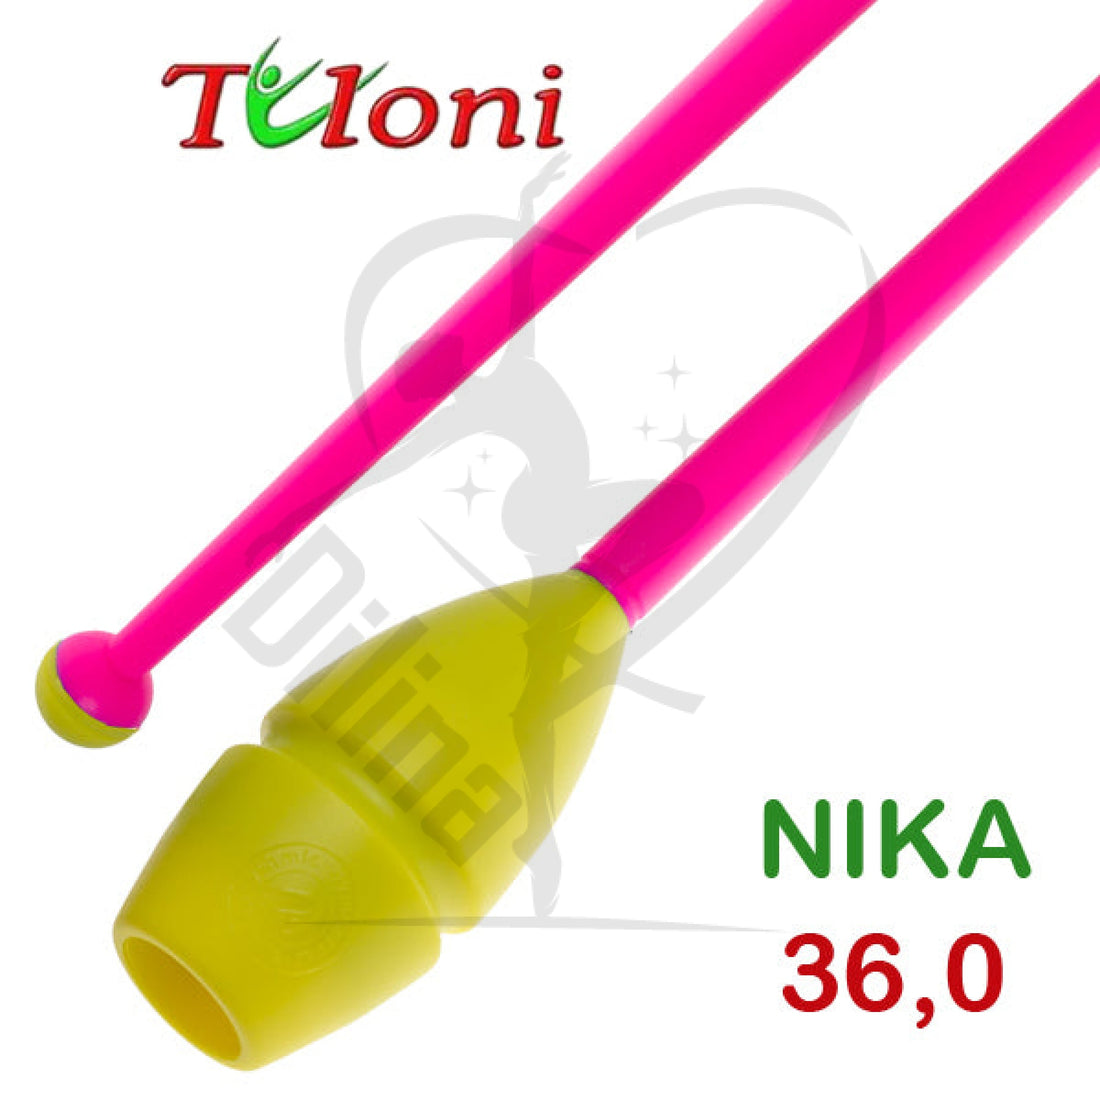 Tuloni Bi-Colour Connectable Clubs Mos. Nika 36Cm Yellow X Pink